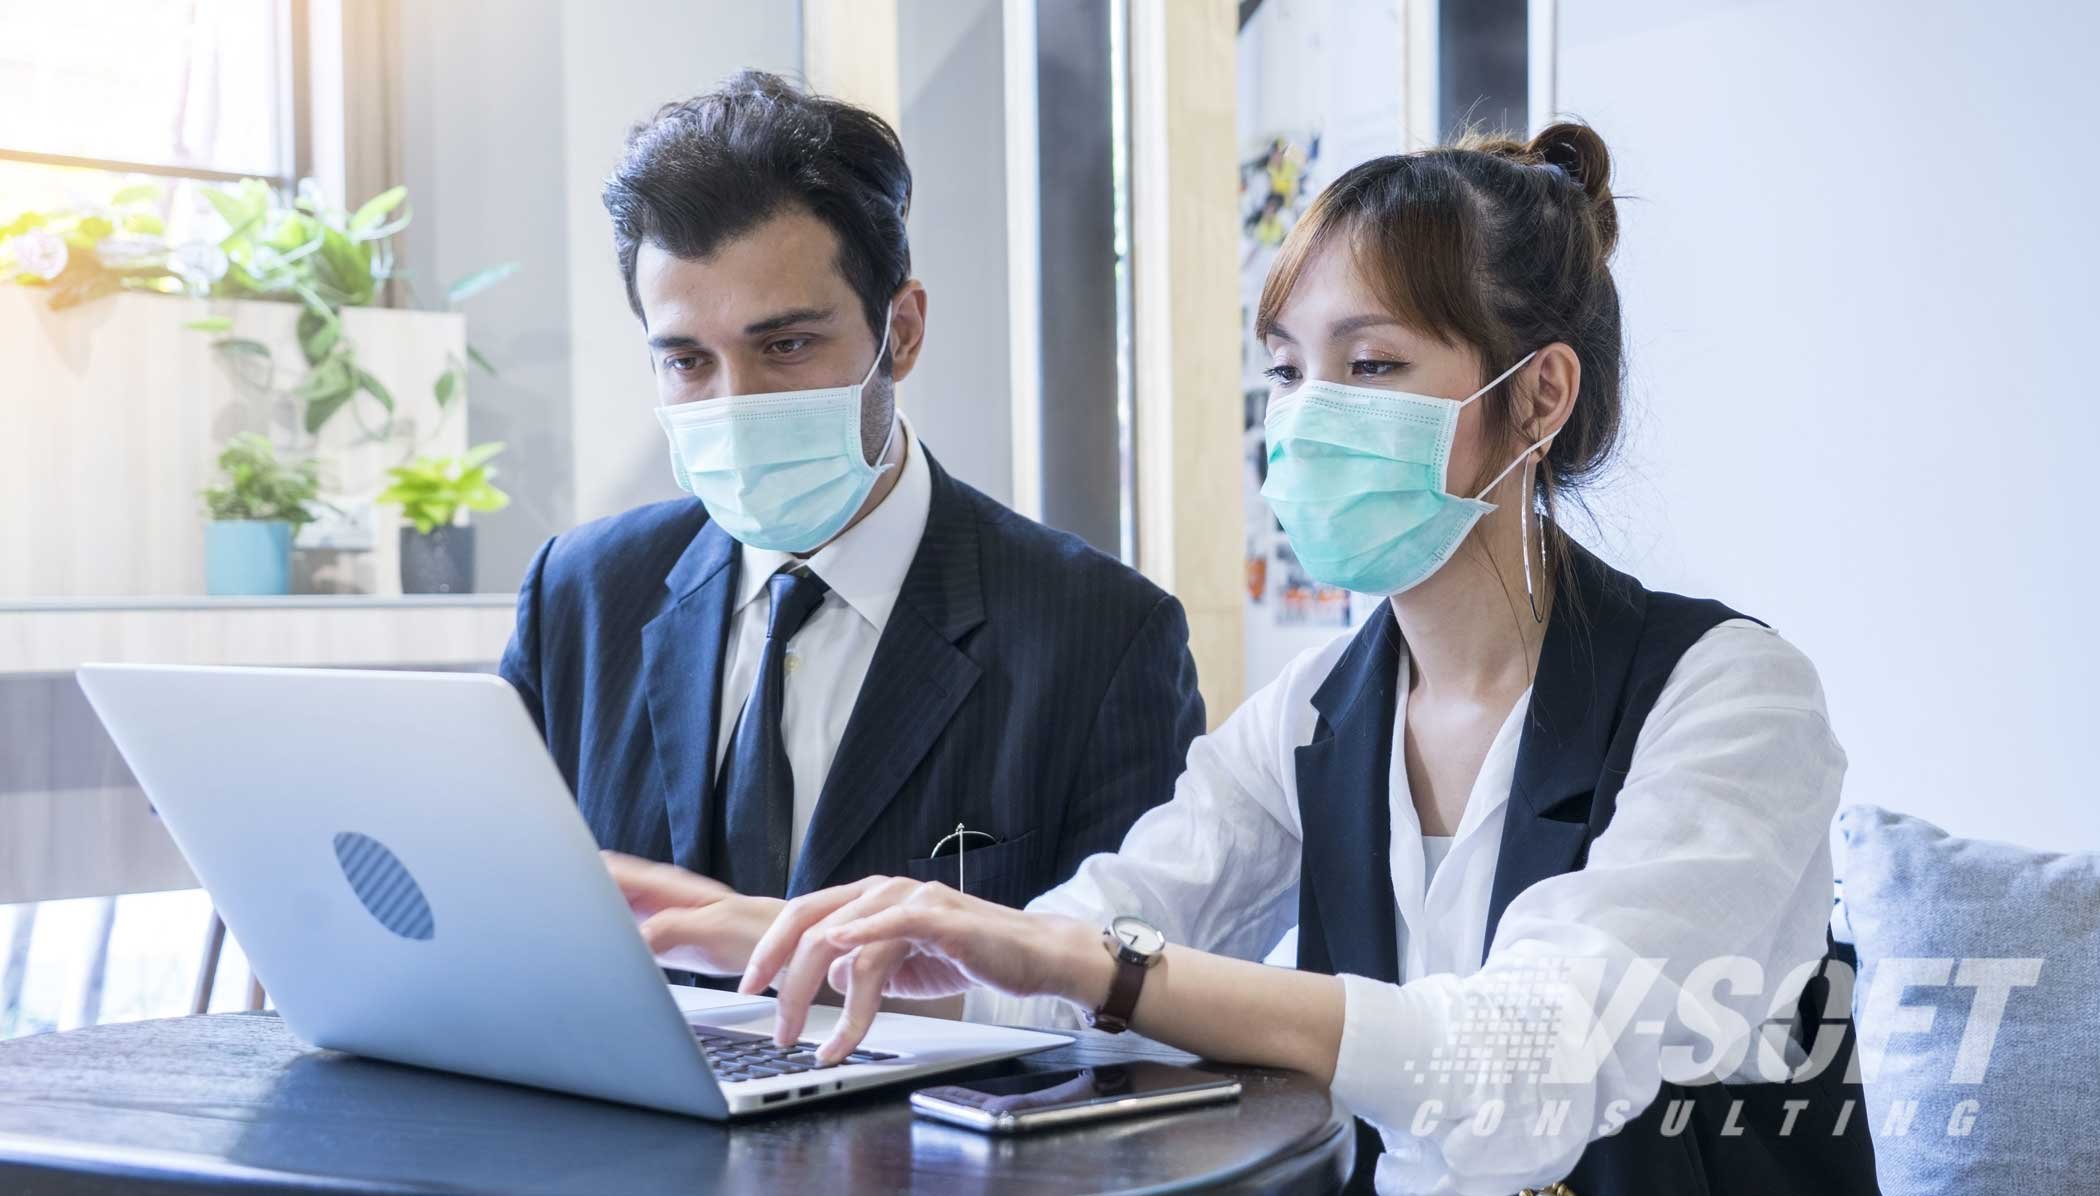 Two employees wearing masks